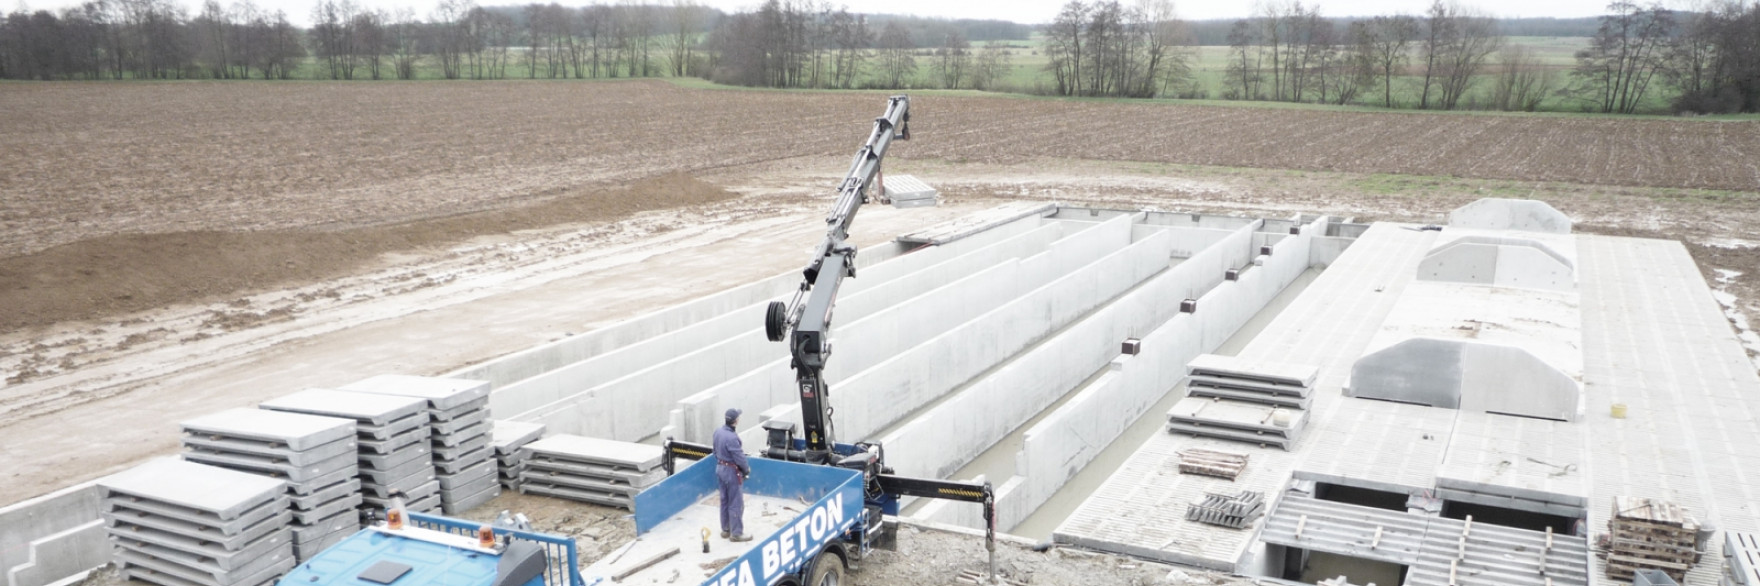 Productie beton grondwerkers